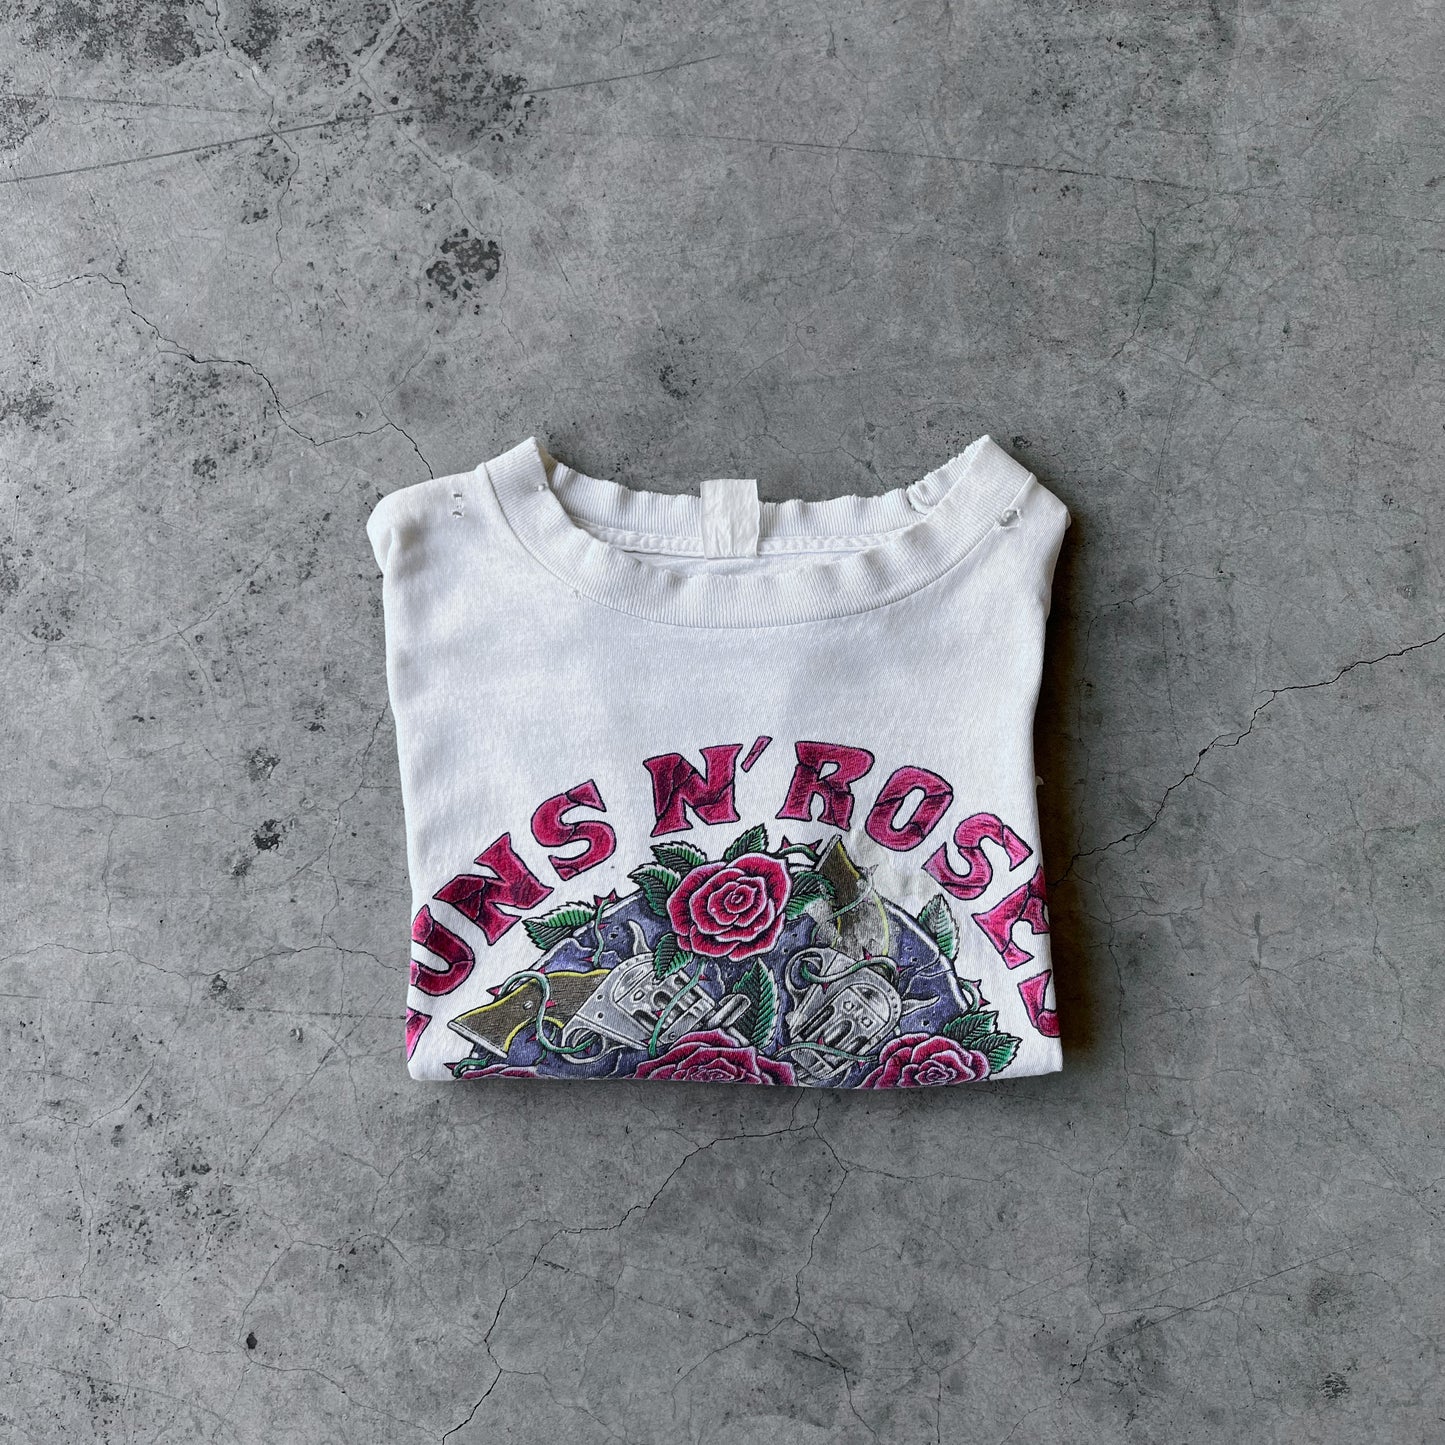 90’s Guns N’ Roses Cutoff Shirt - Women’s - S